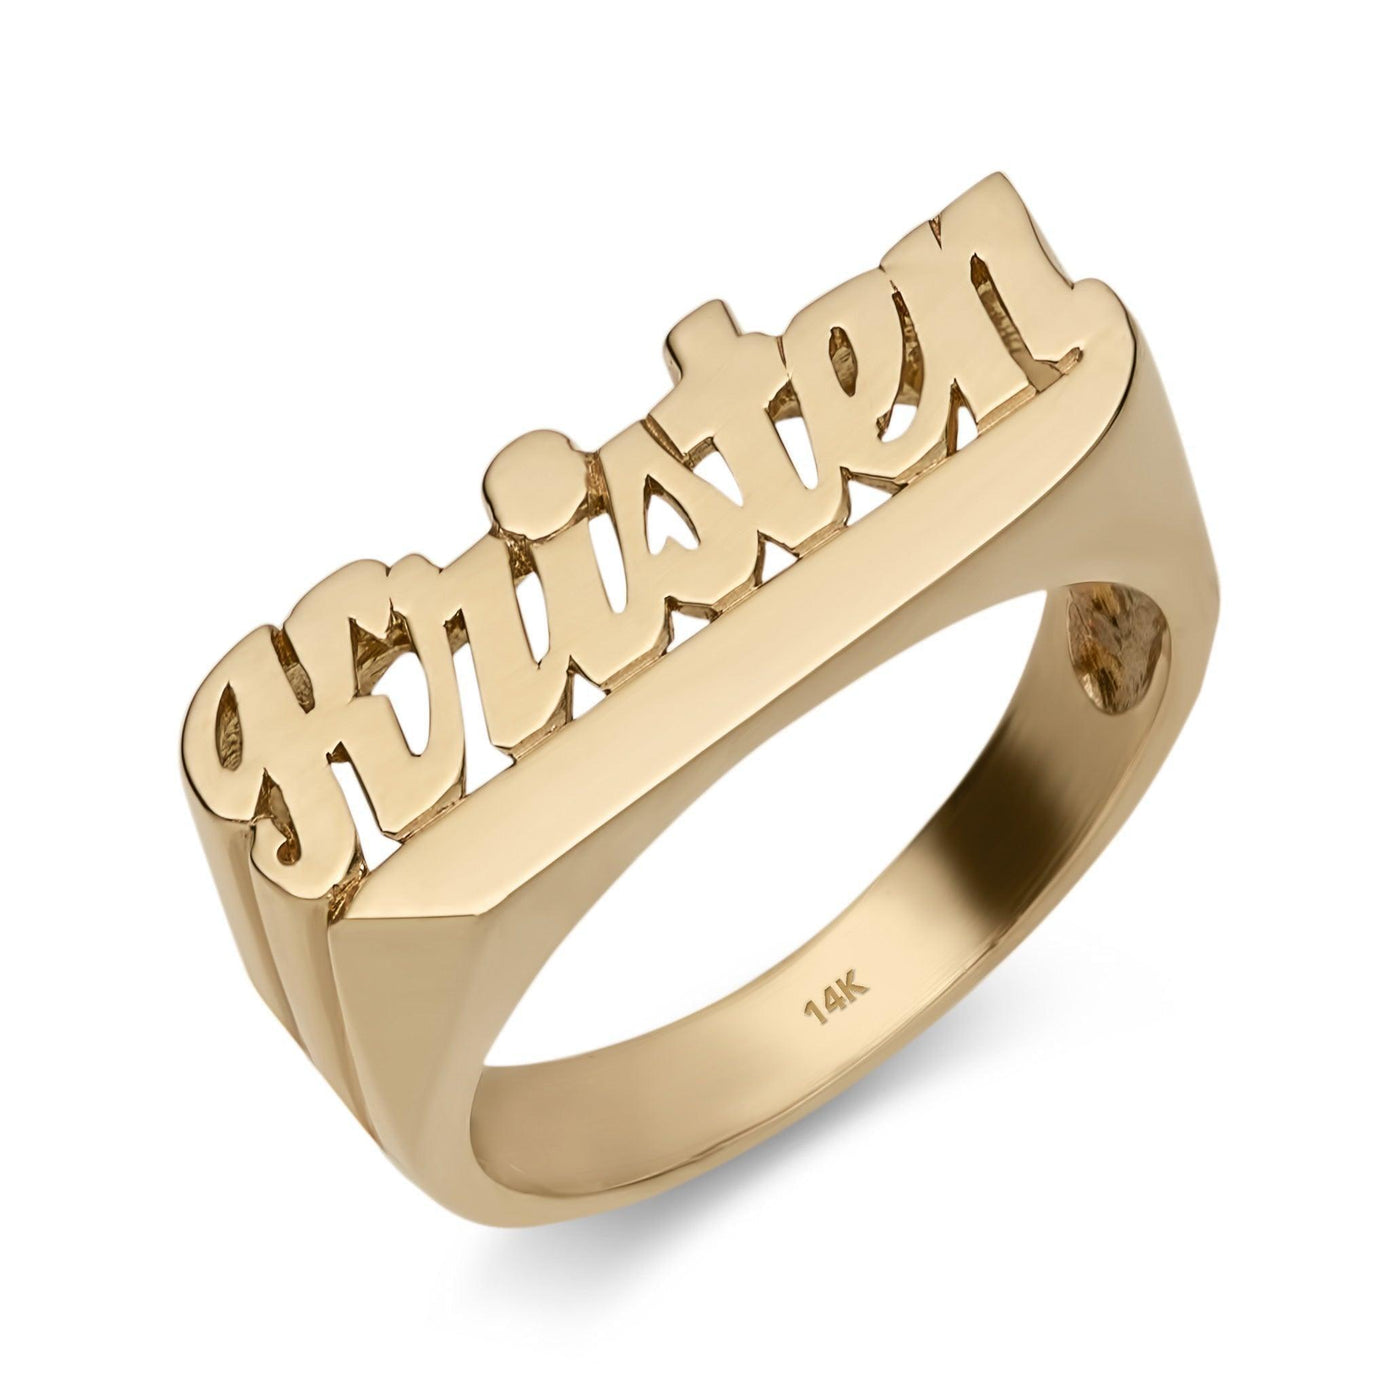 Name Ring 14K Gold - Style 22 - bayamjewelry